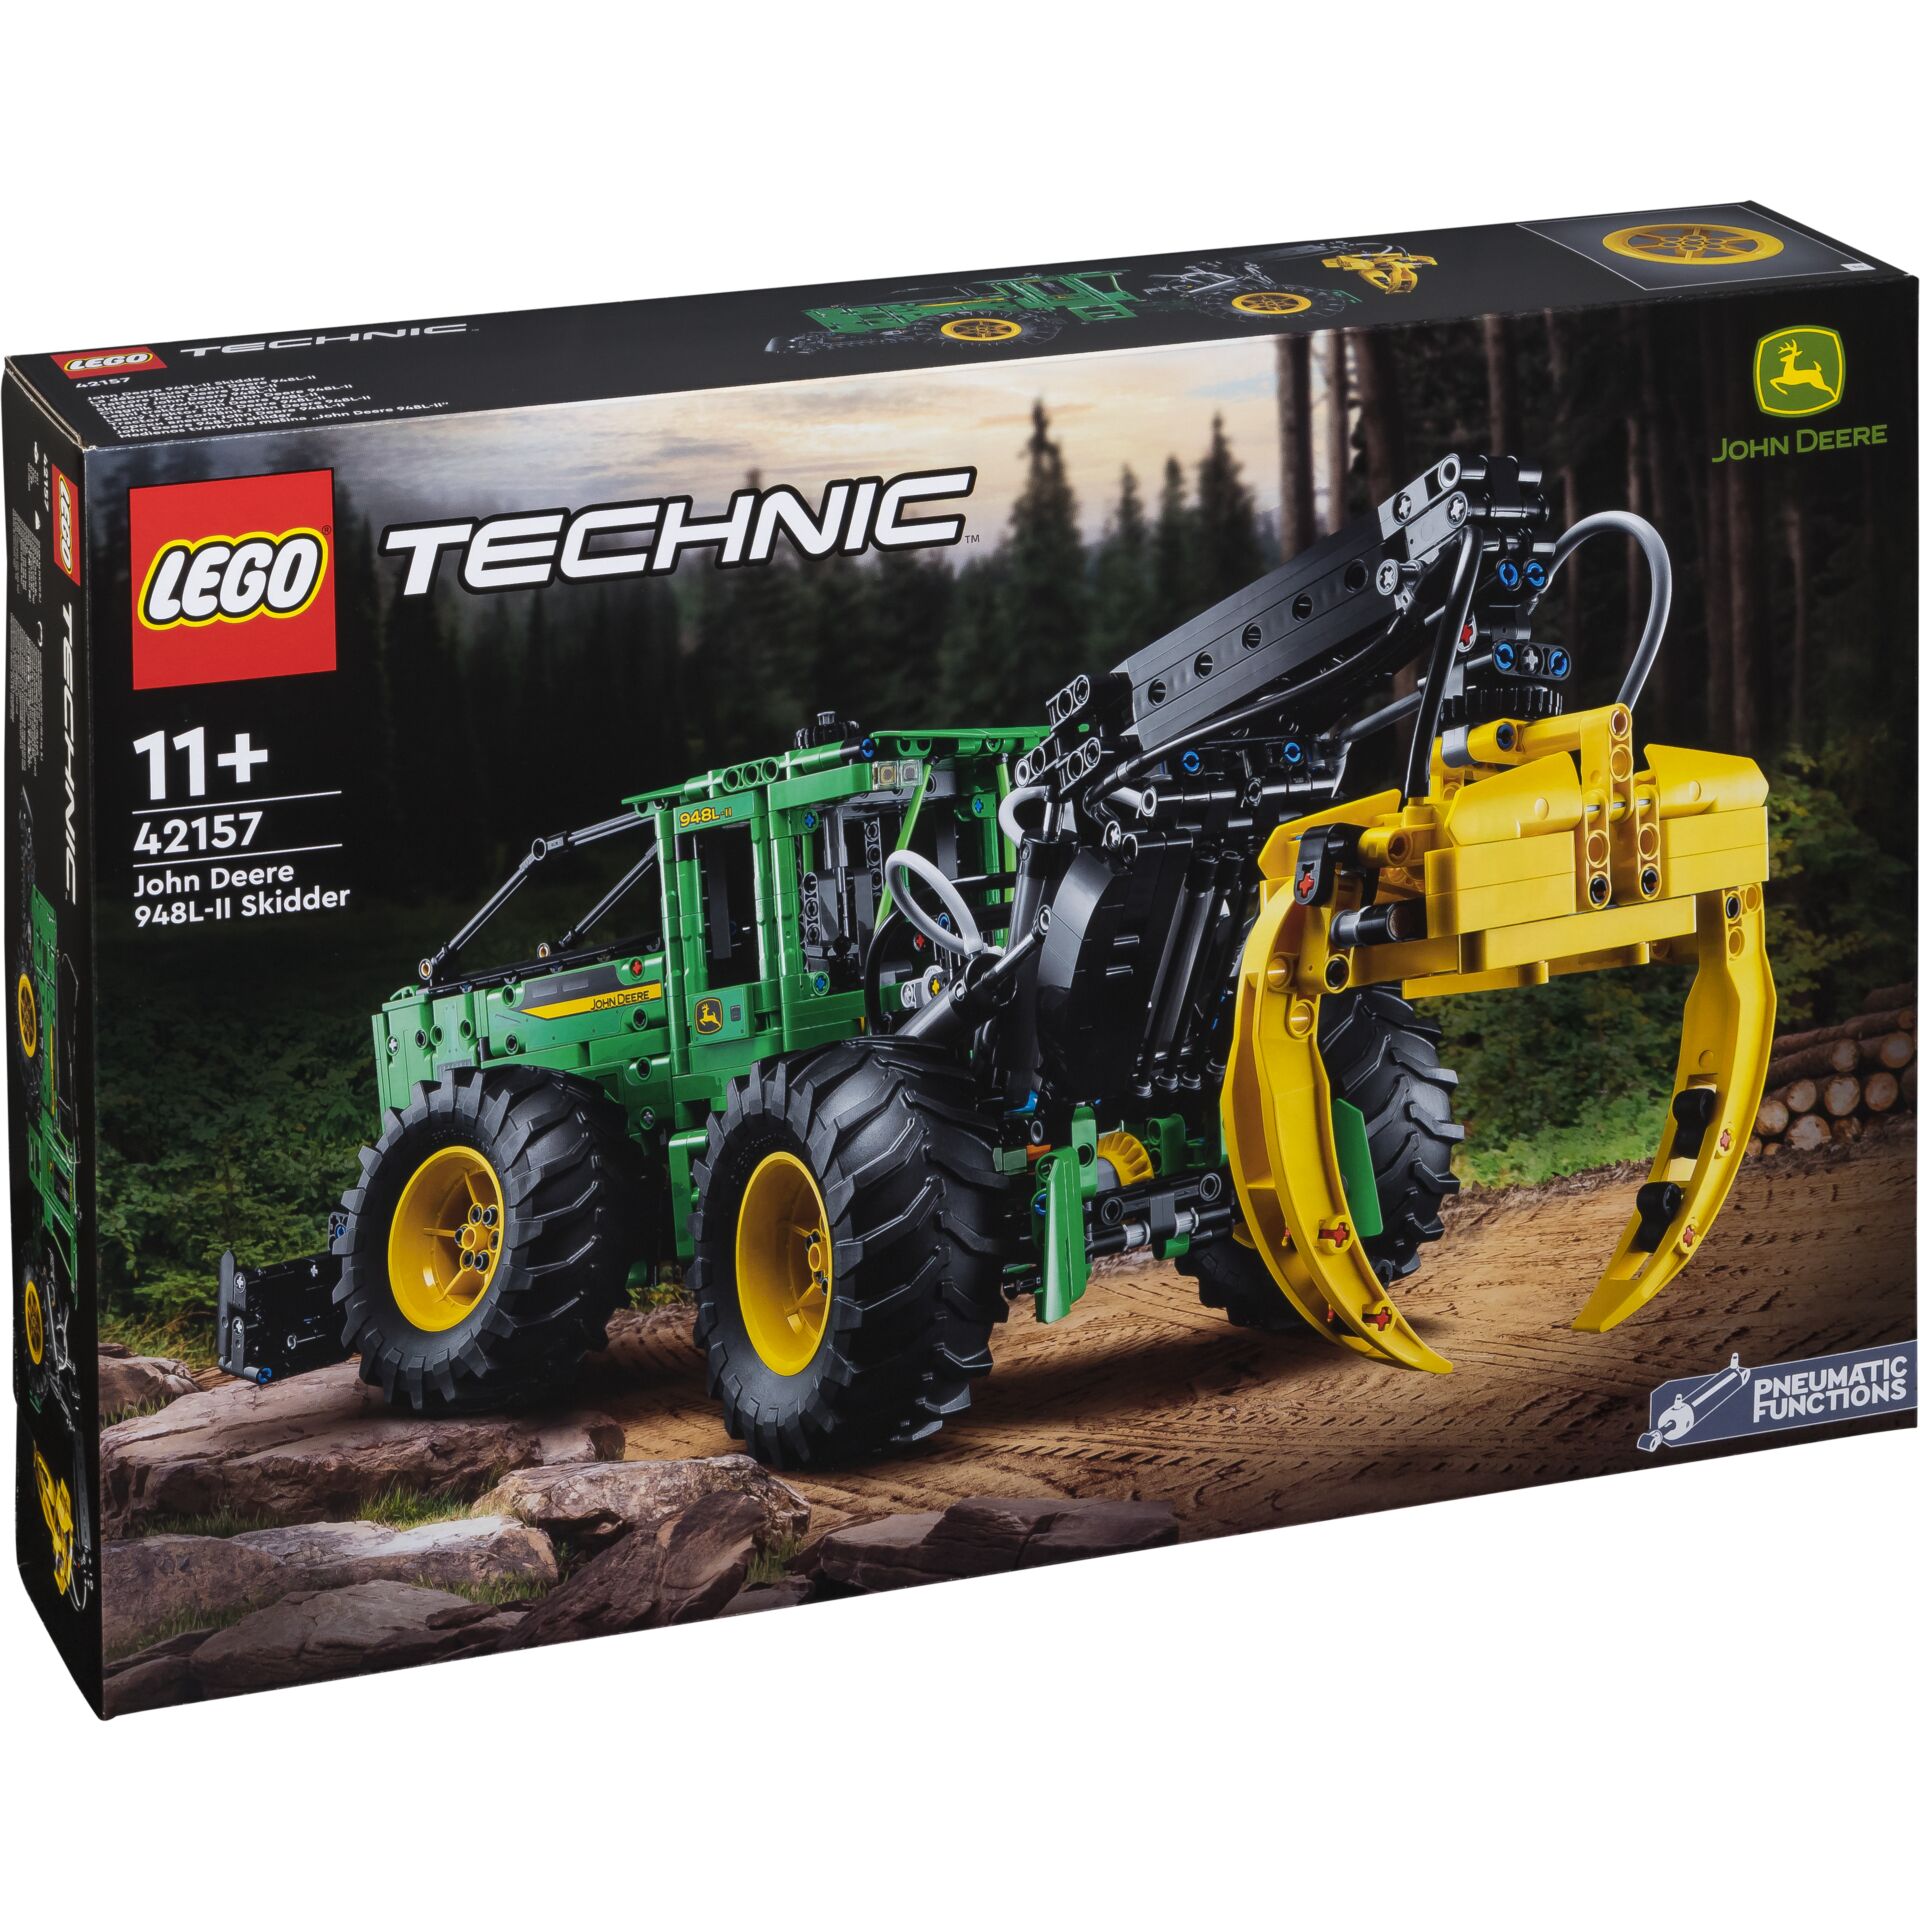 LEGO Technic 42157 trattore John Deere 948L-II